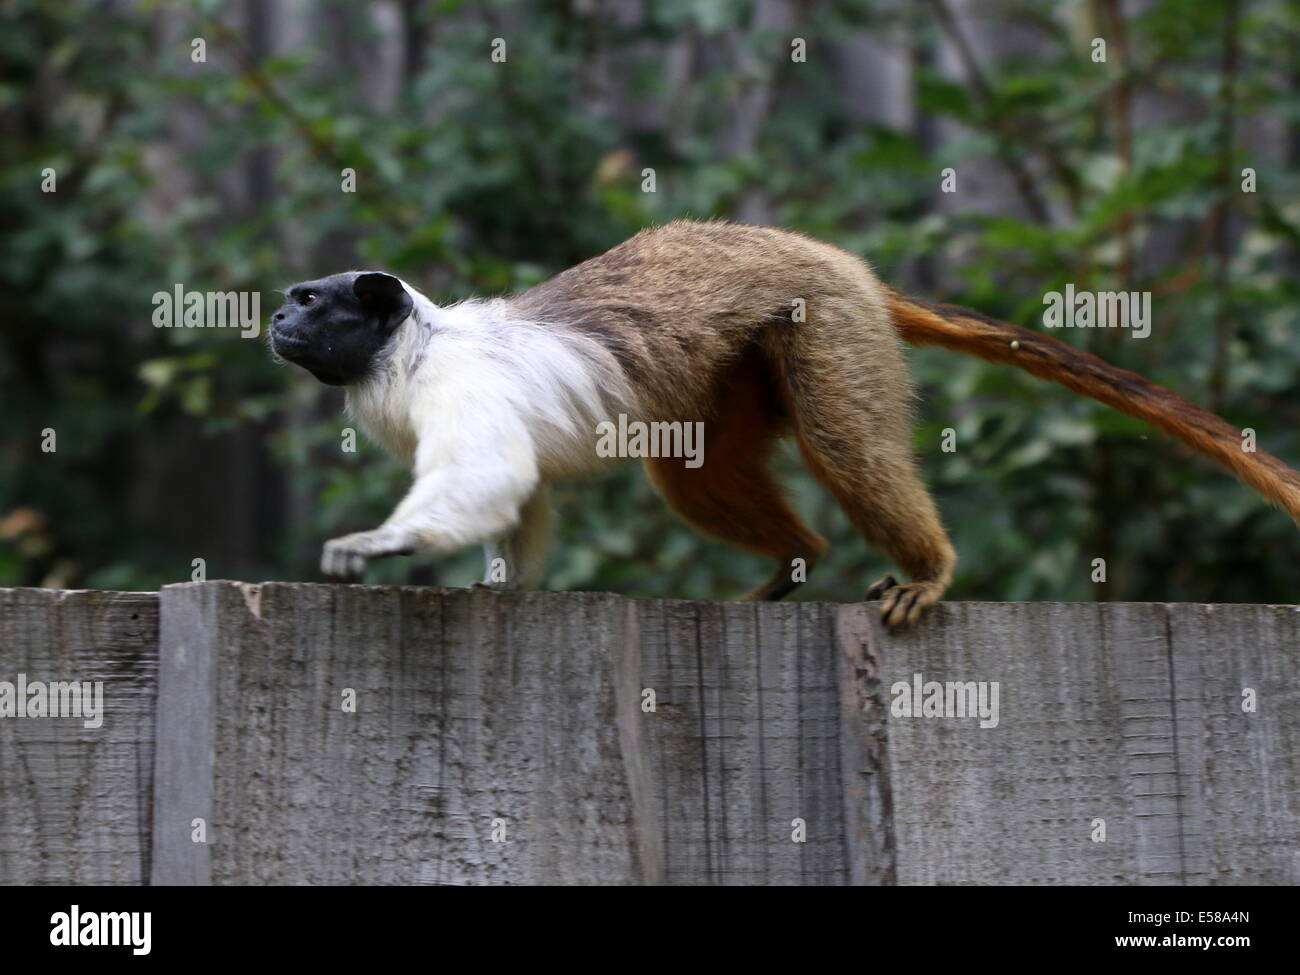 Pied tamarin monkey (Saguinus bicolor), endangered primate species from  the Brazilian Amazon Rainforest. Apenheul, Netherlands Stock Photo